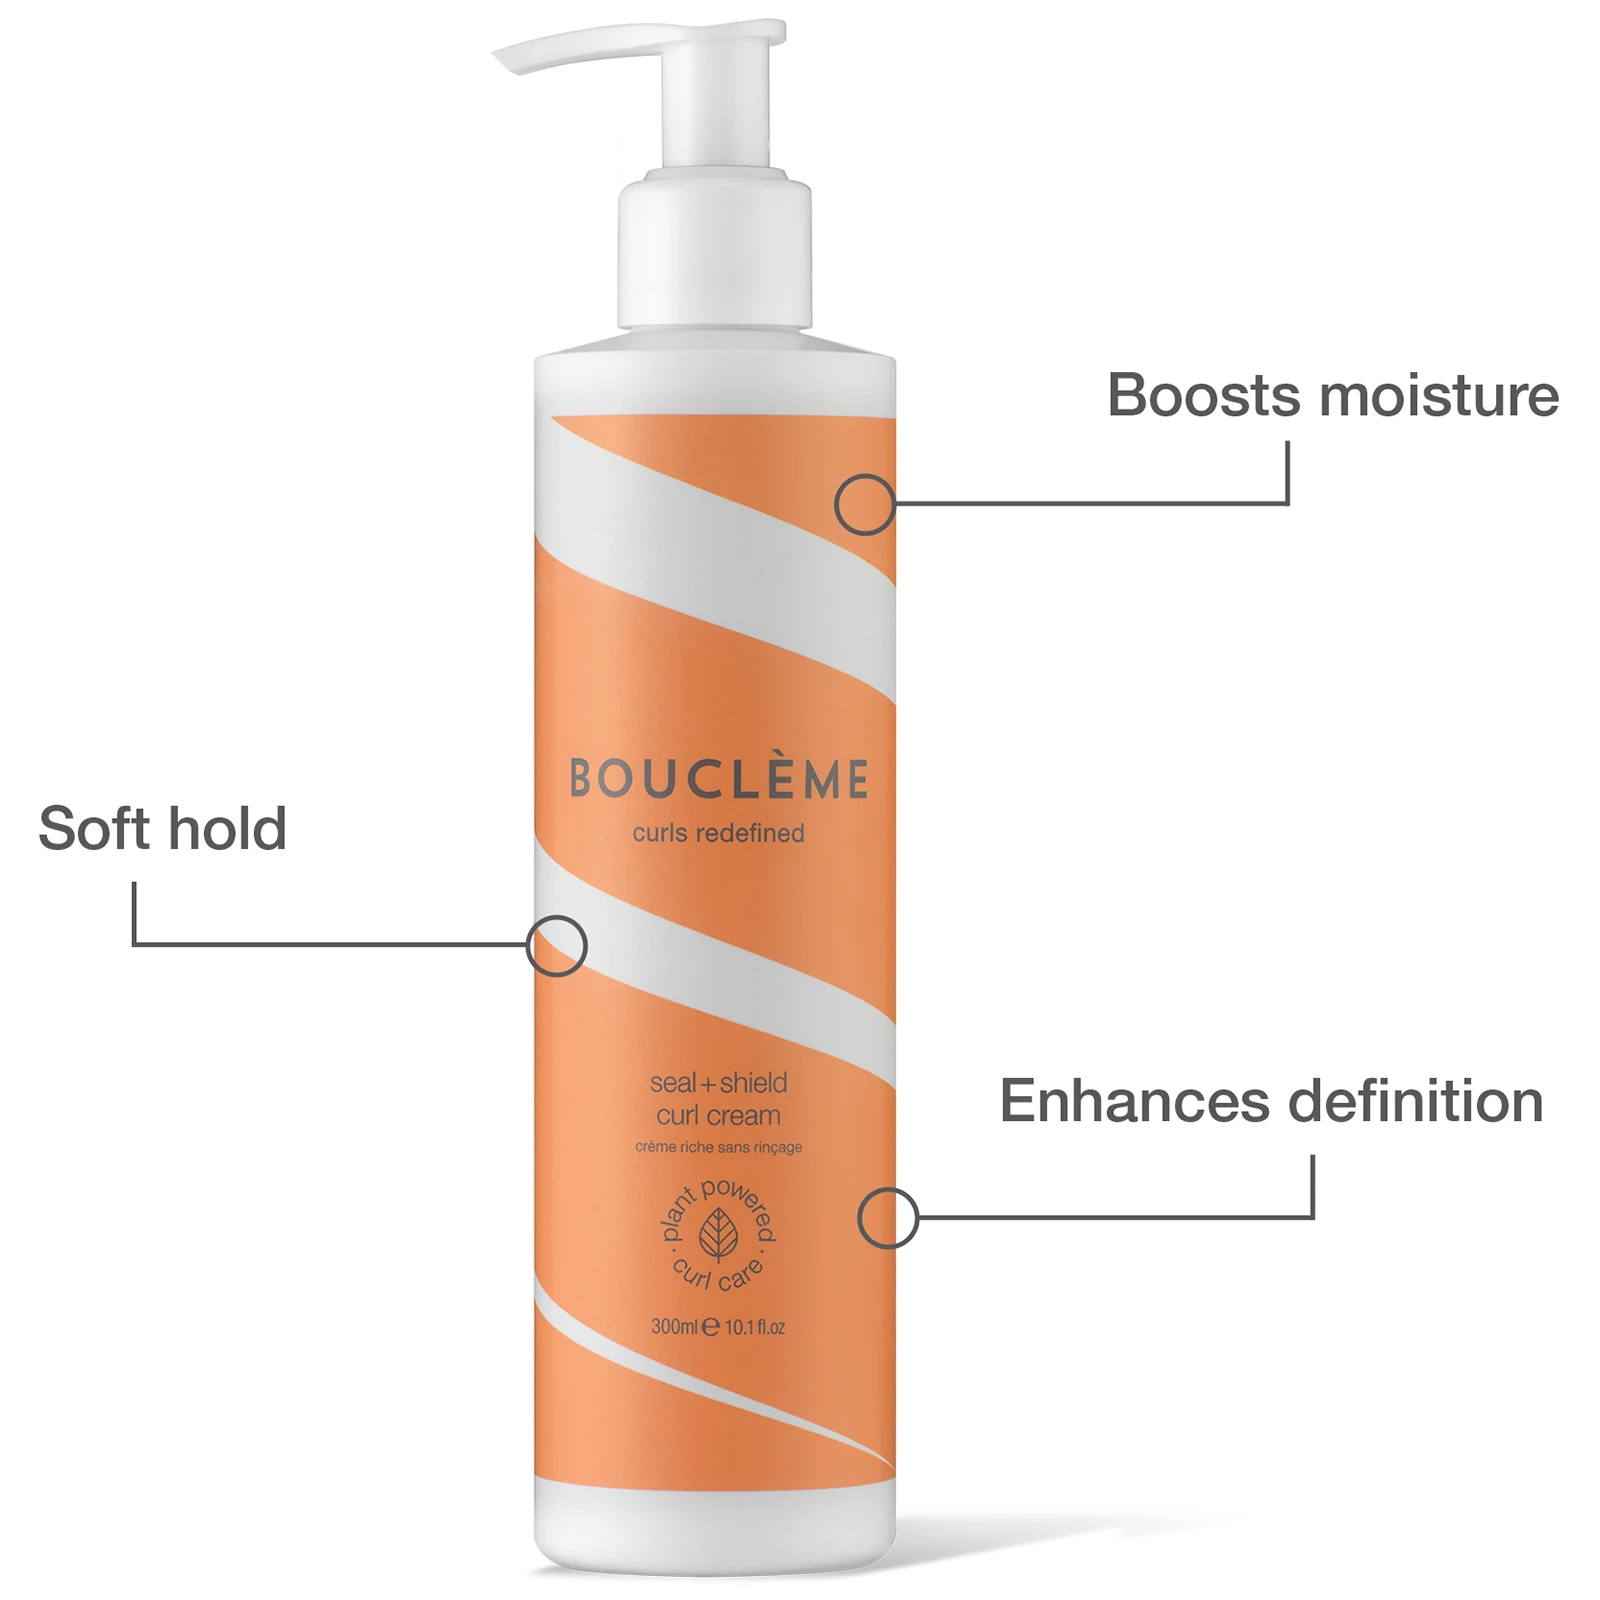 boosts moisture, soft hold, enhances definition